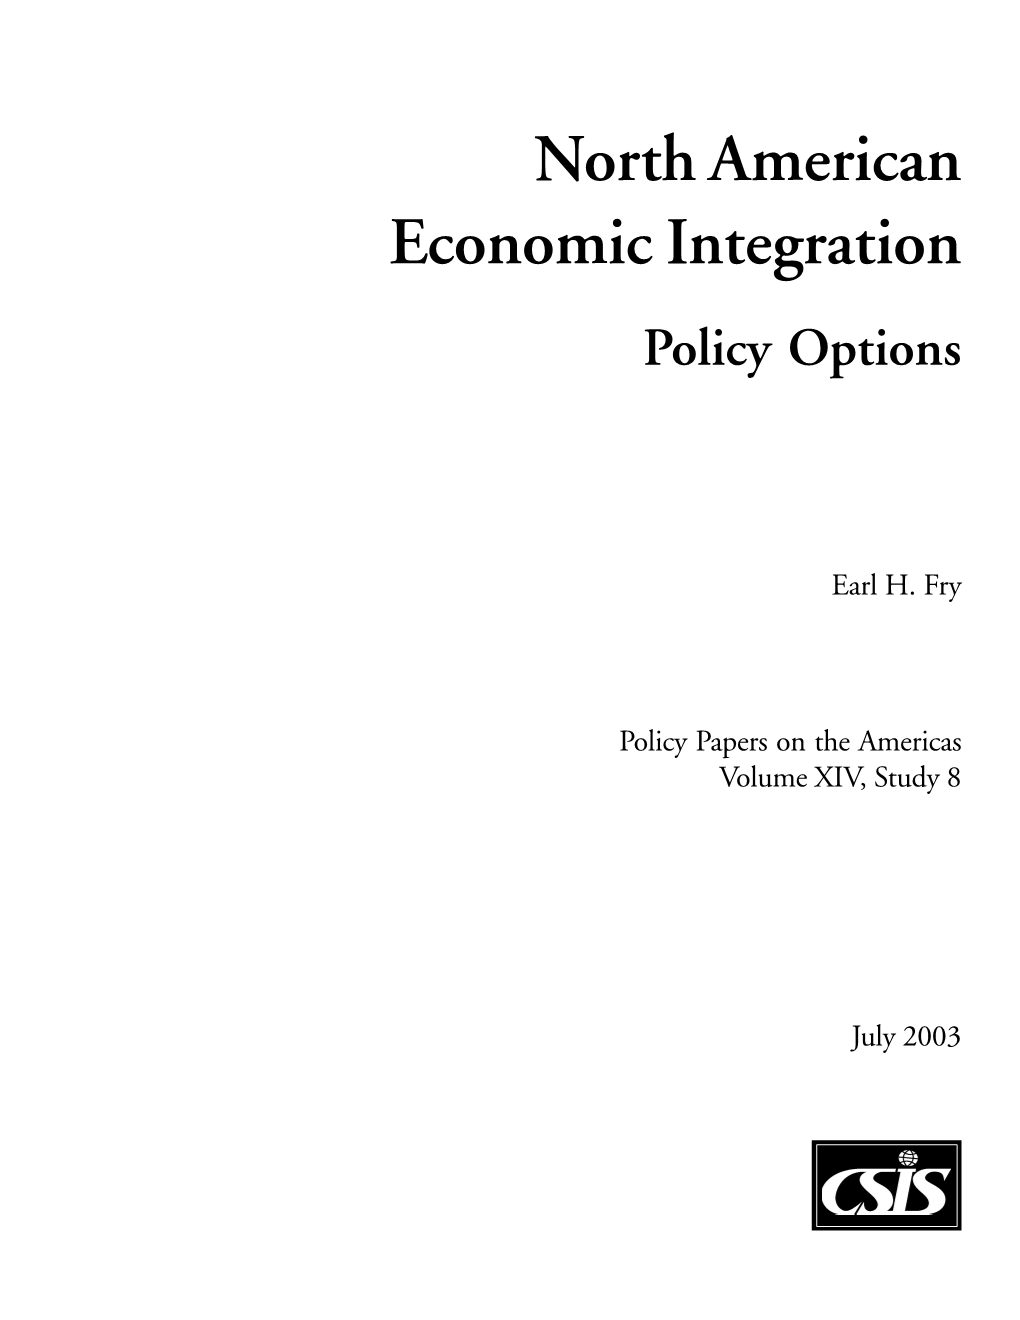 North American Economic Integration Policy Options